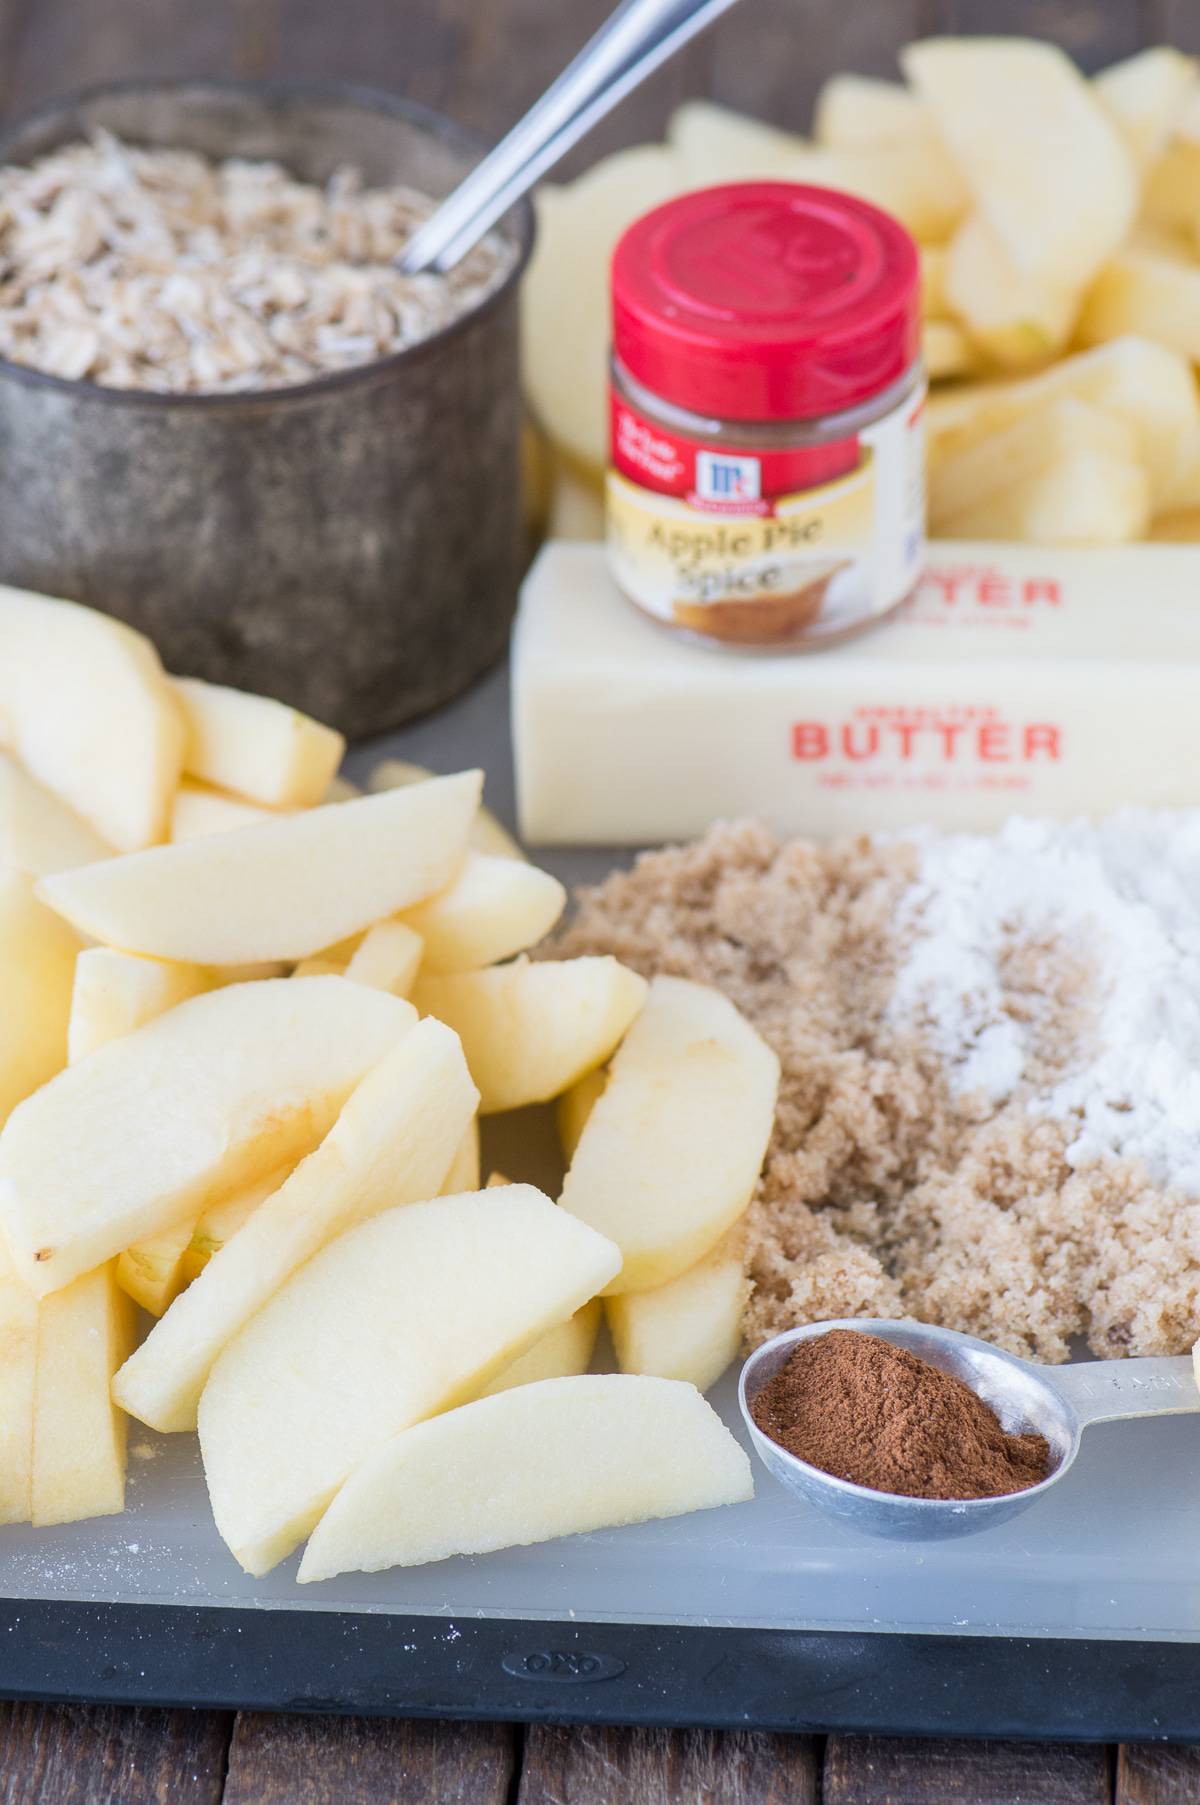 ingredients to make crock pot apple crisp including apples, butter, brown sugar, cinnamon, and oats